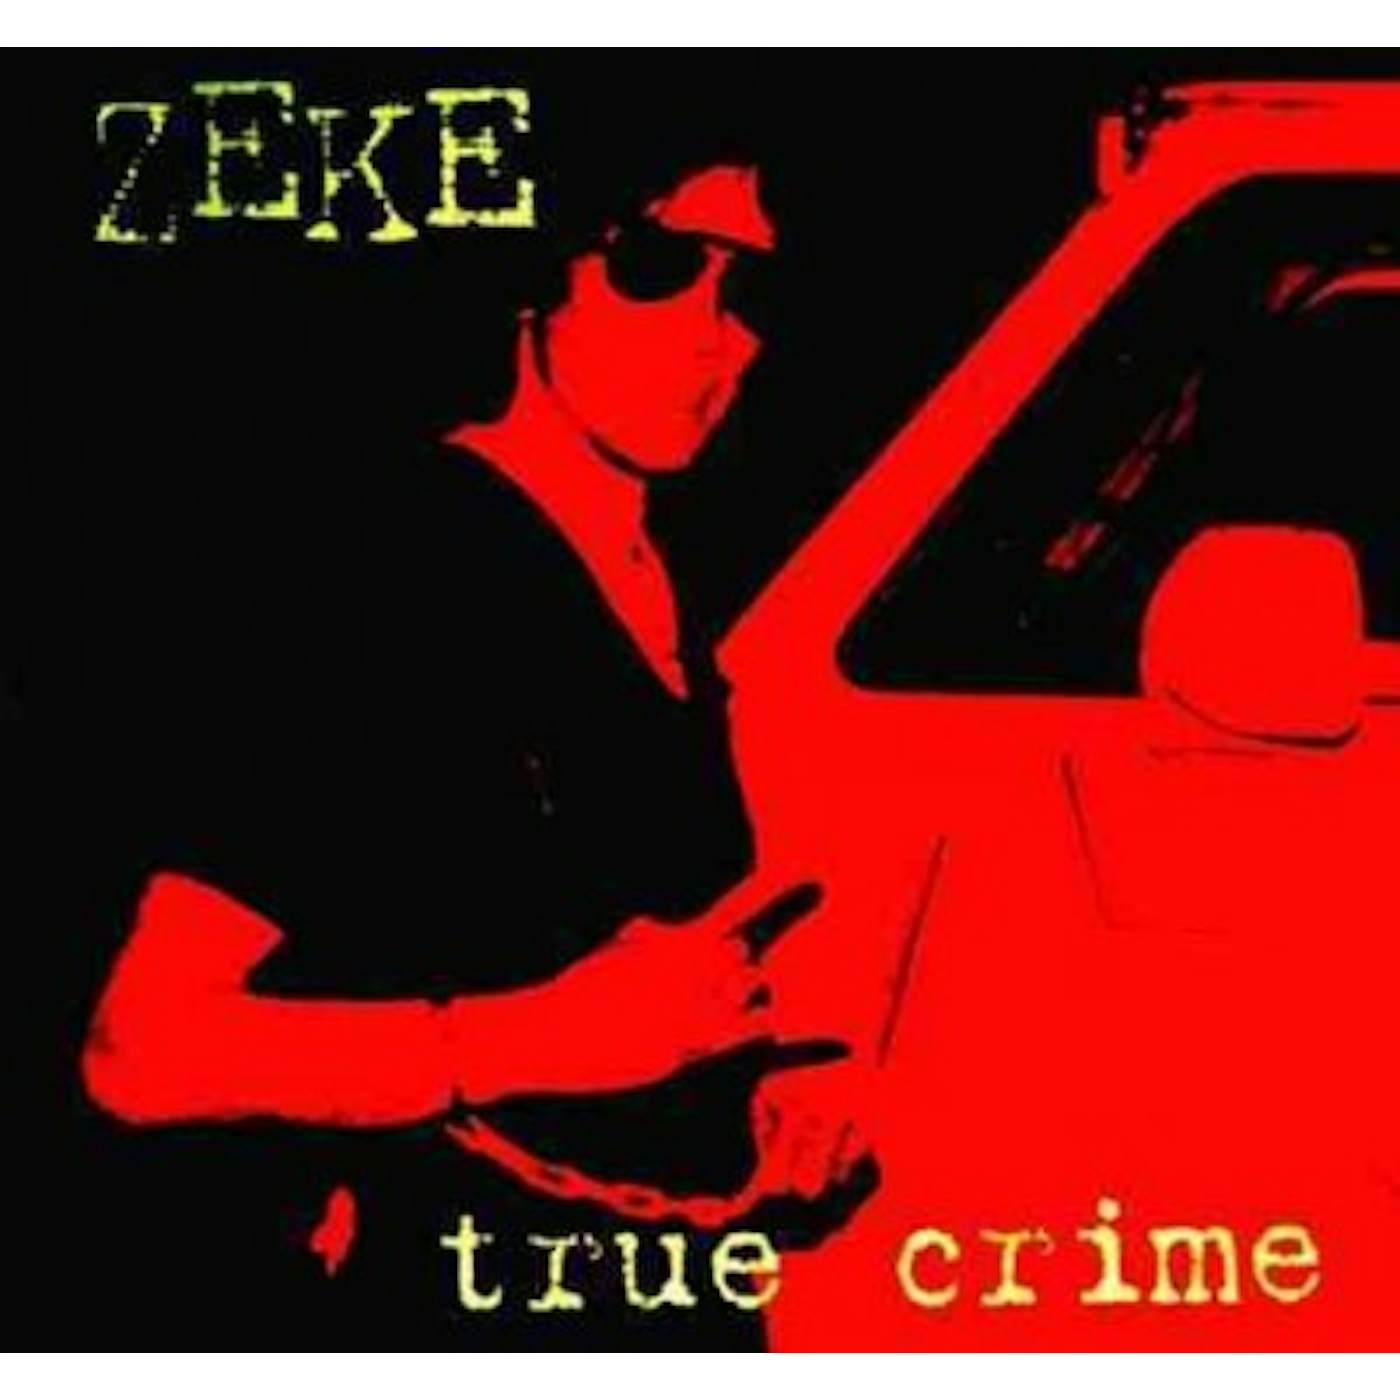 Zeke True Crime Vinyl Record